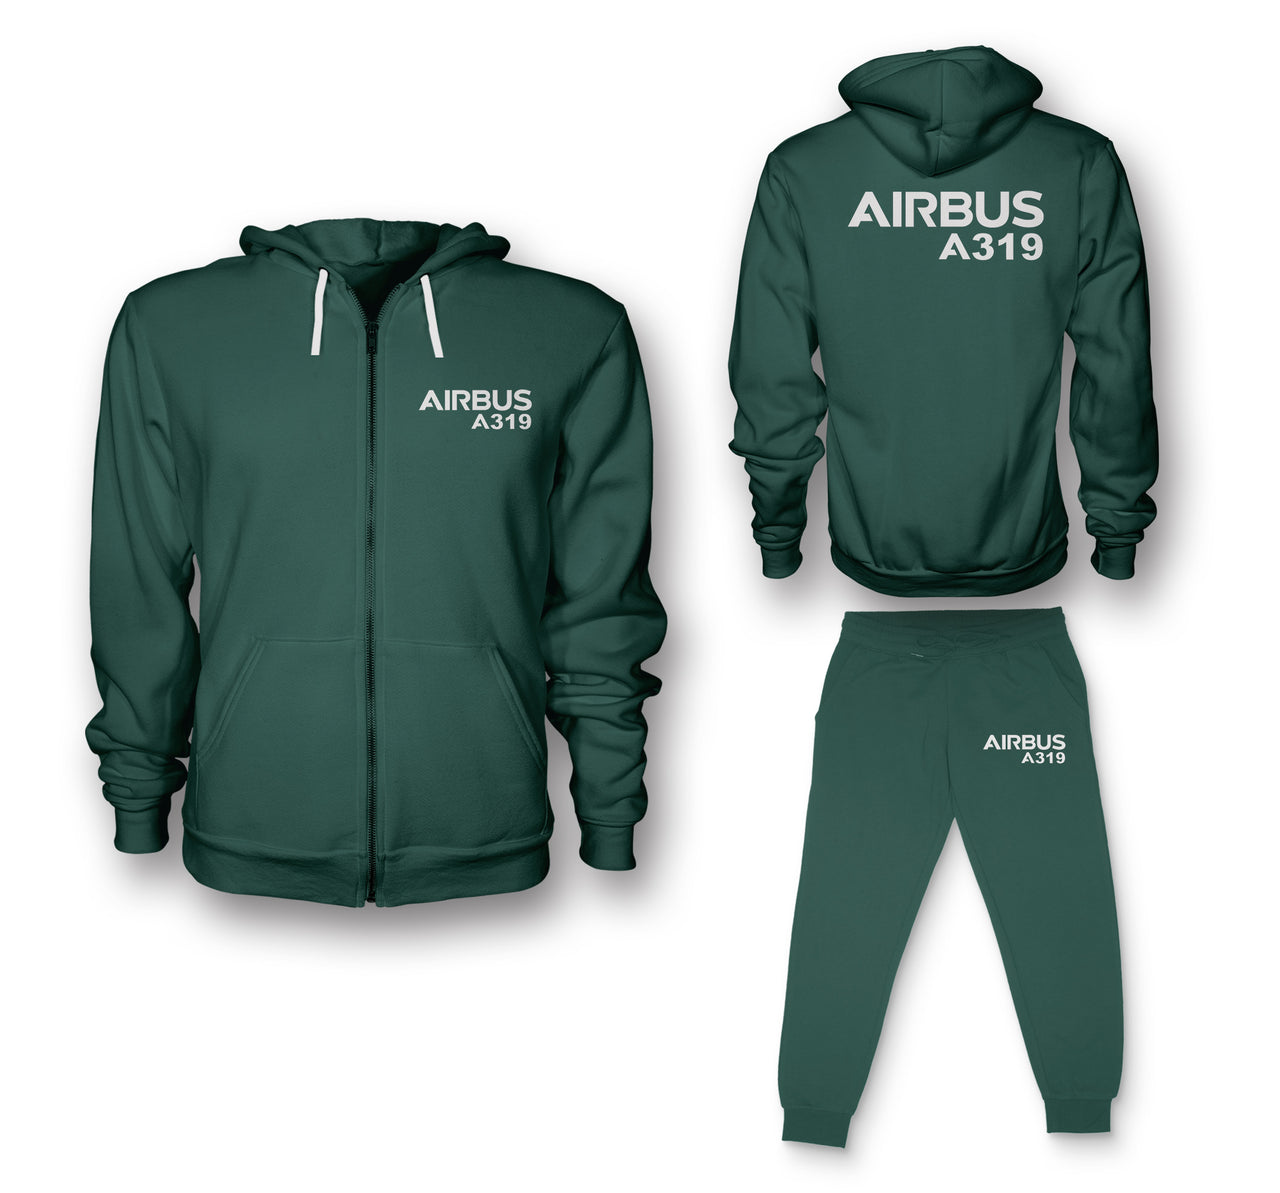 Airbus A319 & Text Designed Zipped Hoodies & Sweatpants Set